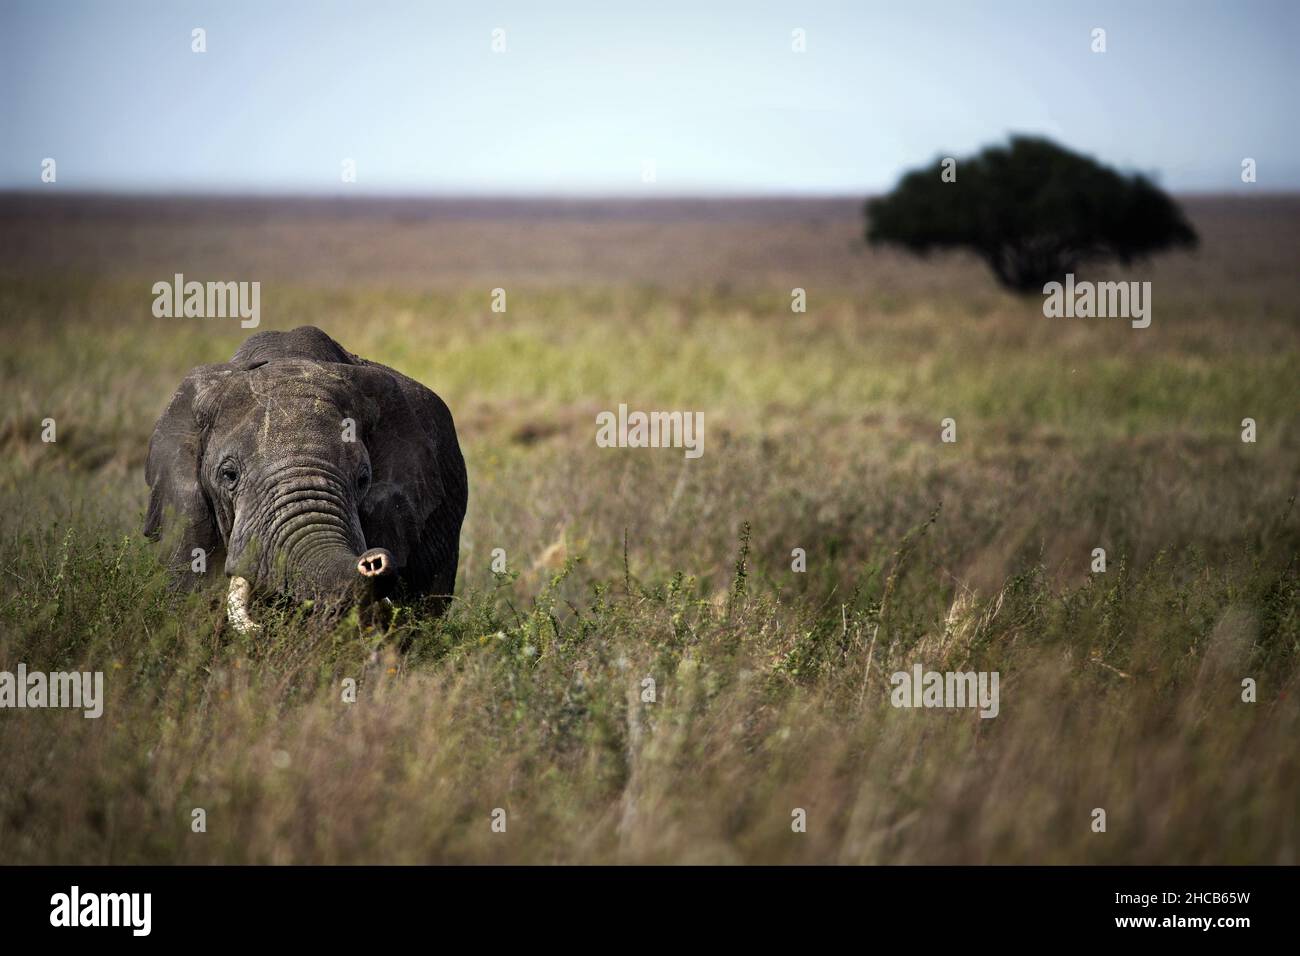 Elephant in an open field in Tanzania Stock Photo